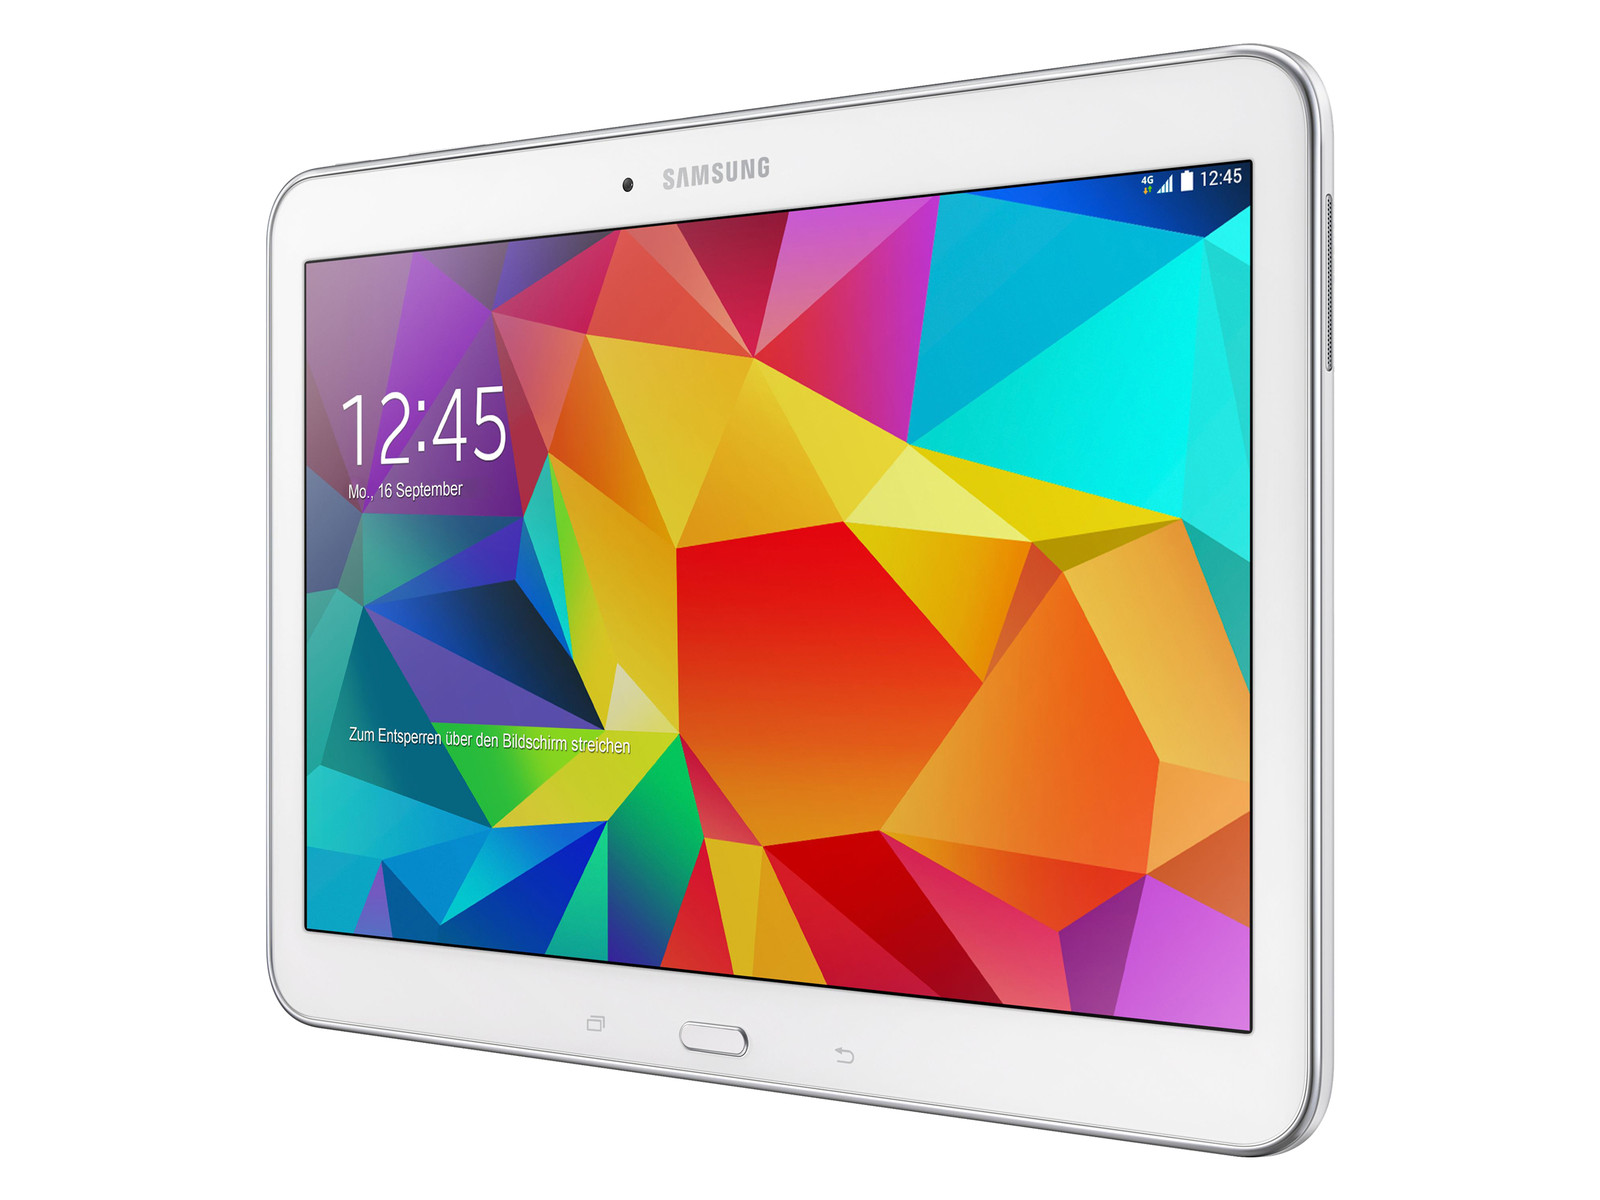 Galaxy Tab 4 10.1 Tablet NotebookCheck.net Reviews